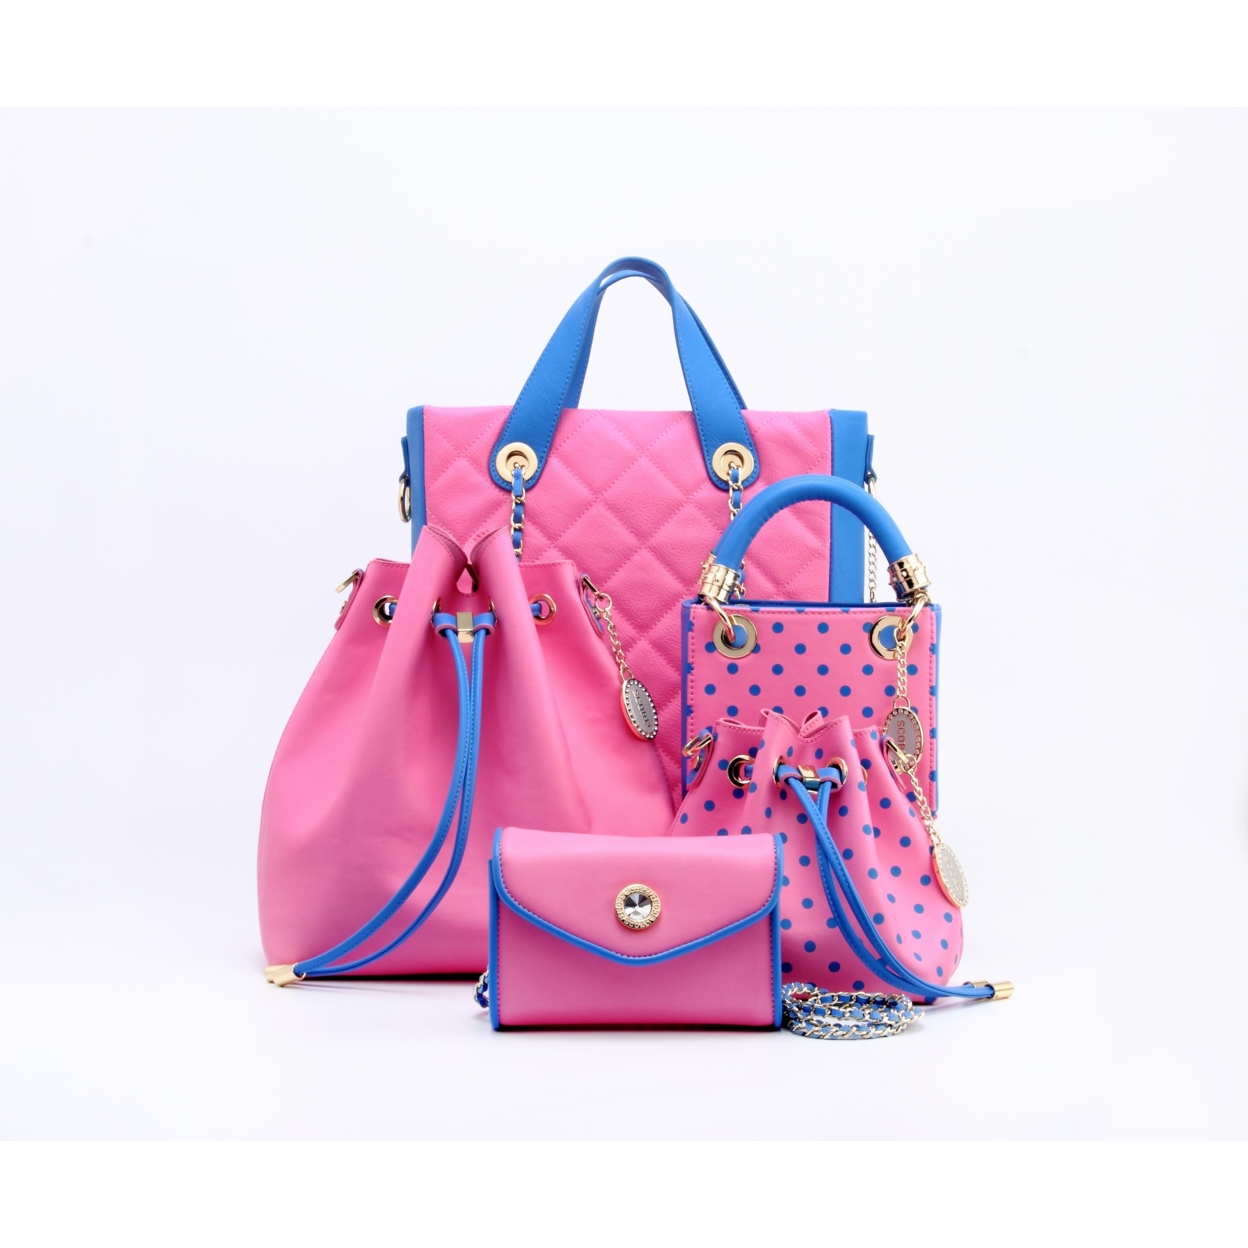 SCORE! Eva Designer Crossbody Clutch - Pink And Blue